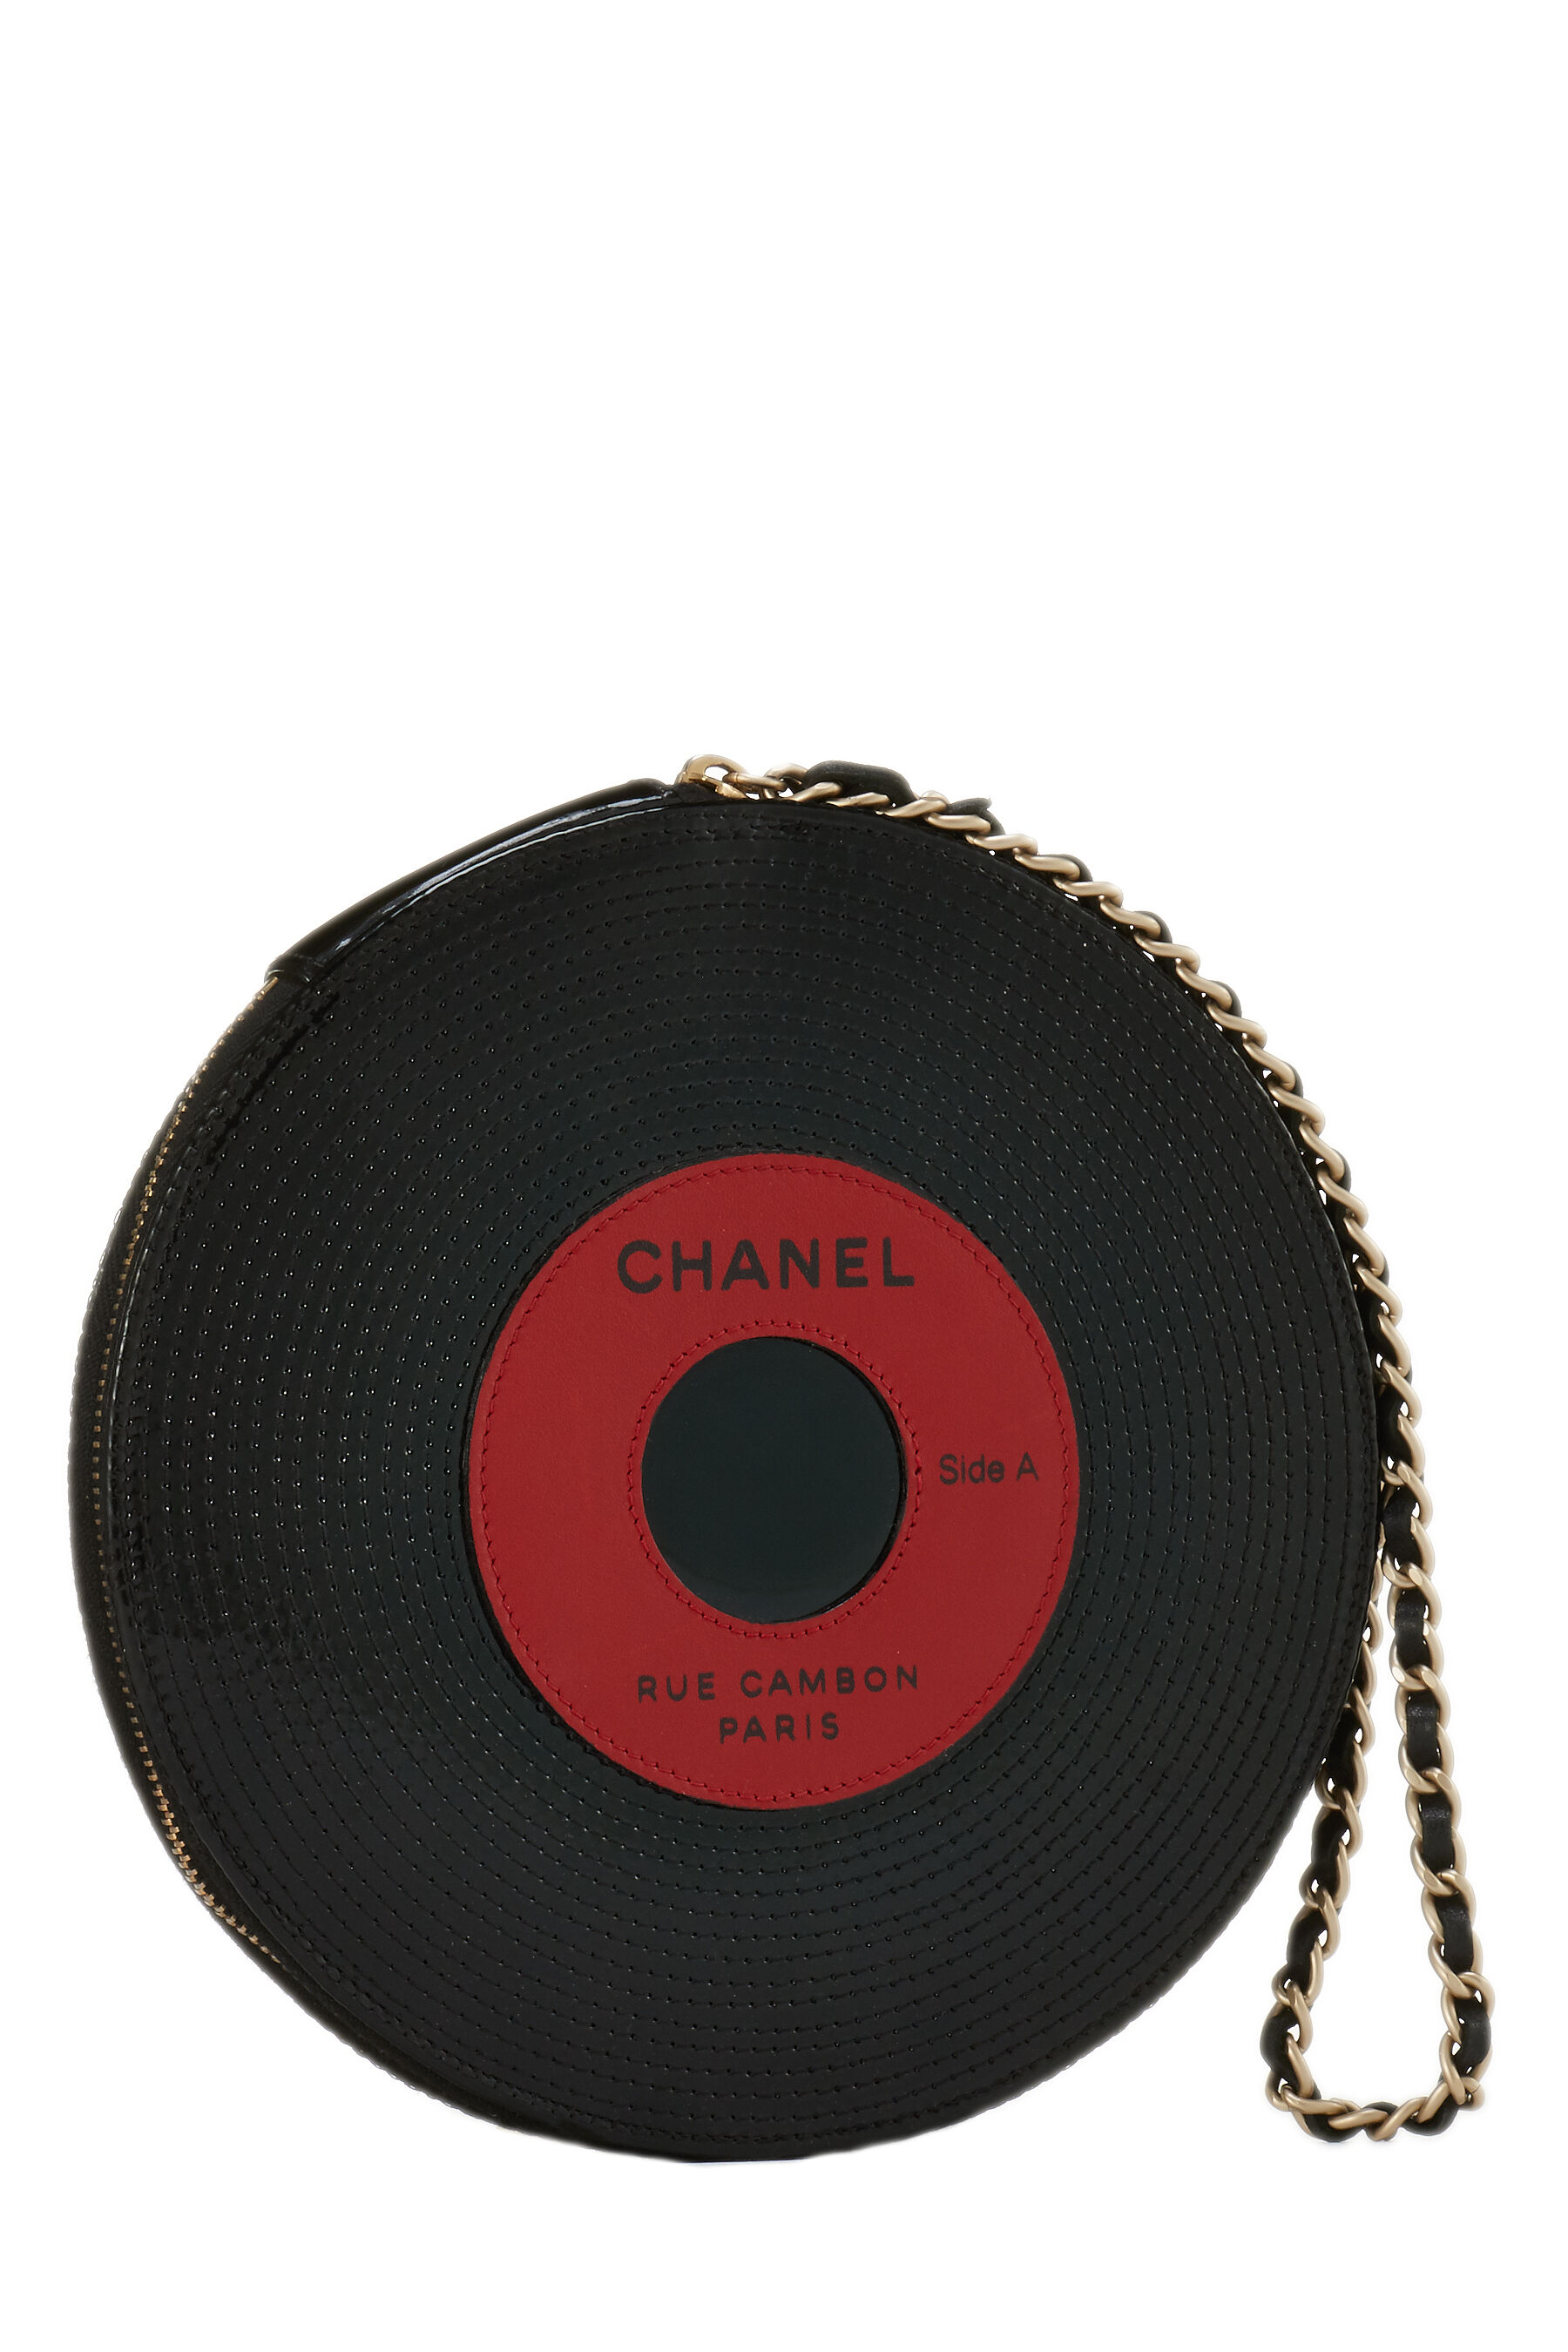 Auth Vintage Chanel stud earrings CC logo vinyl record black